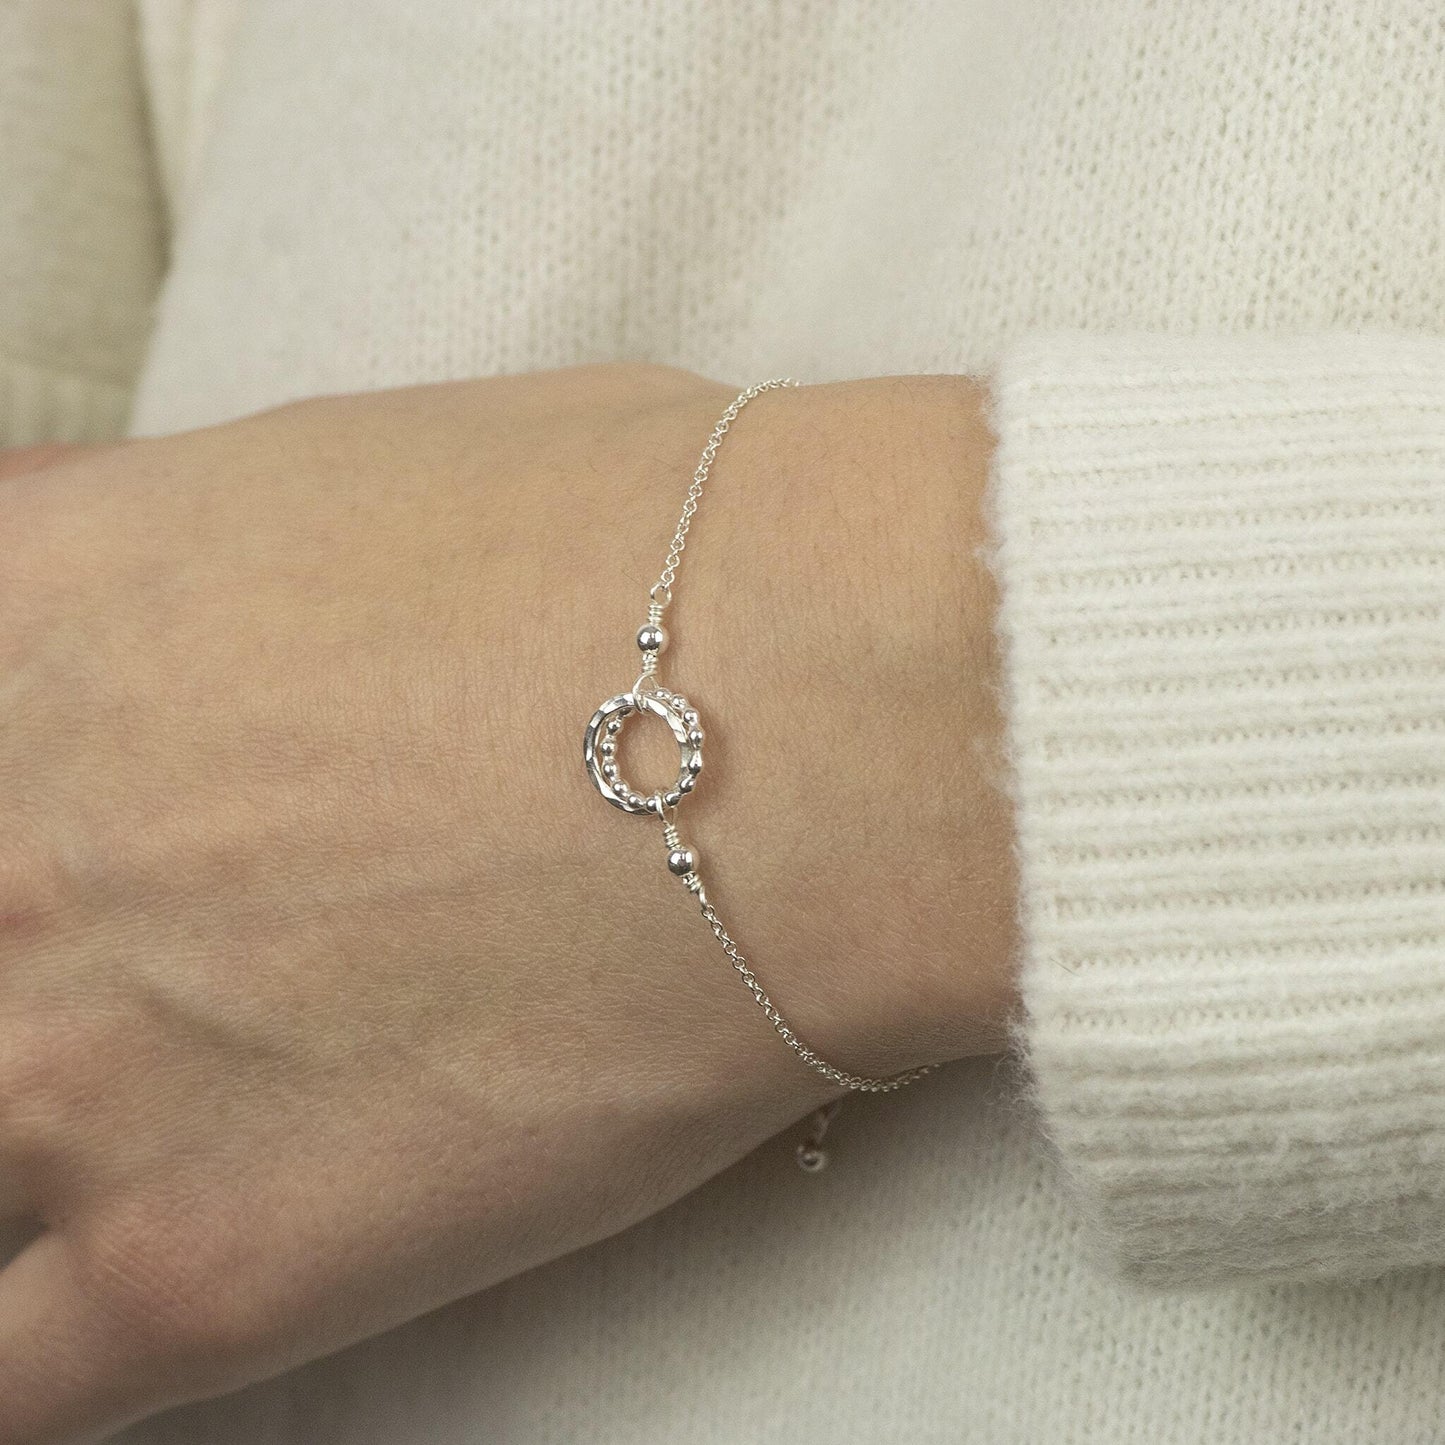 Friendship Gift - Love Knot Bracelet - Linked for a Lifetime - Silver